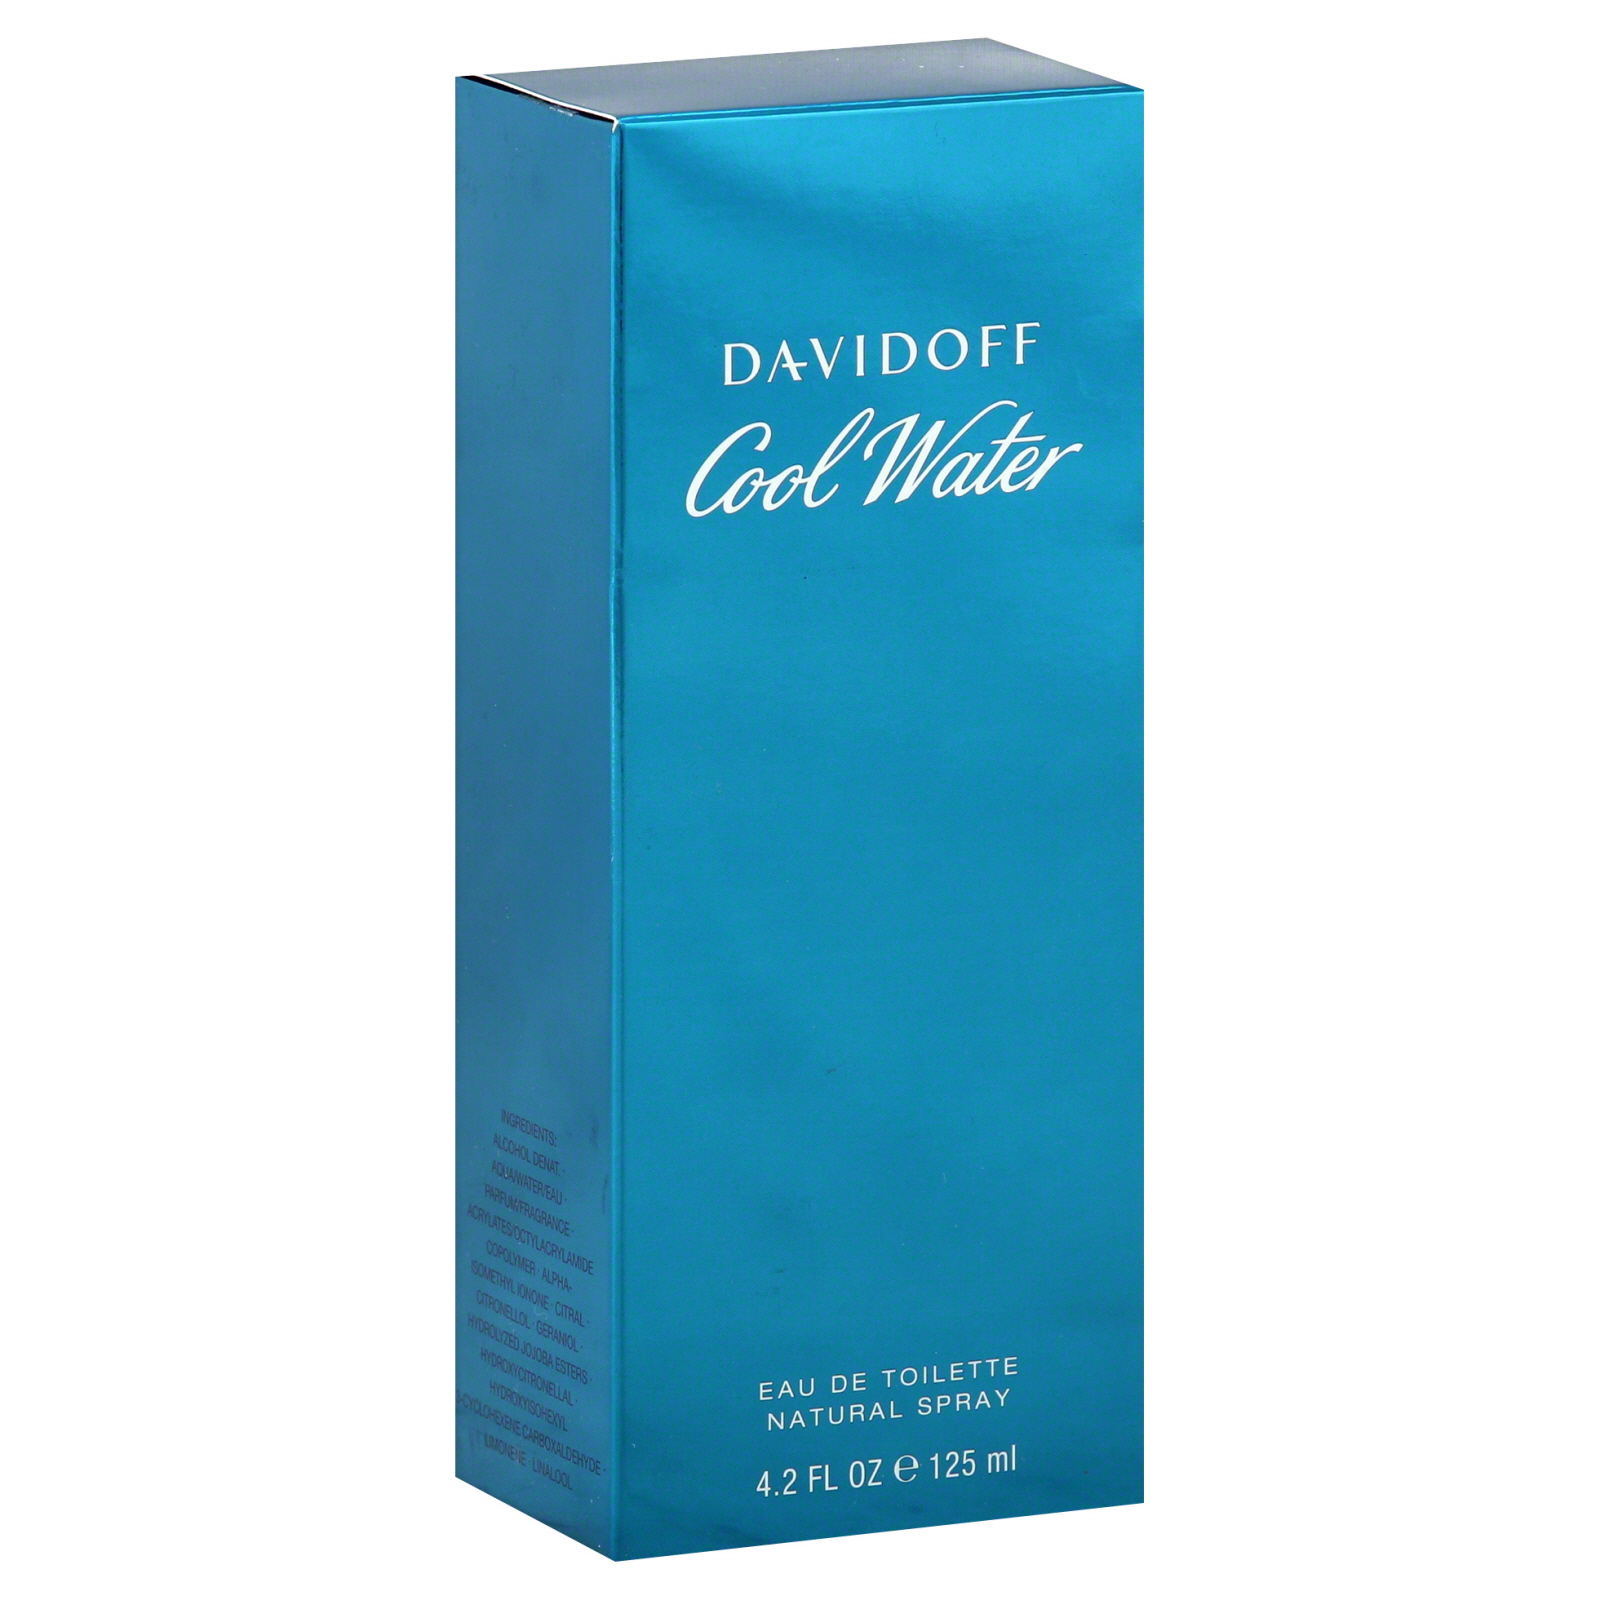 Davidoff Cool Water Eau de Toilette 4.2 fl oz